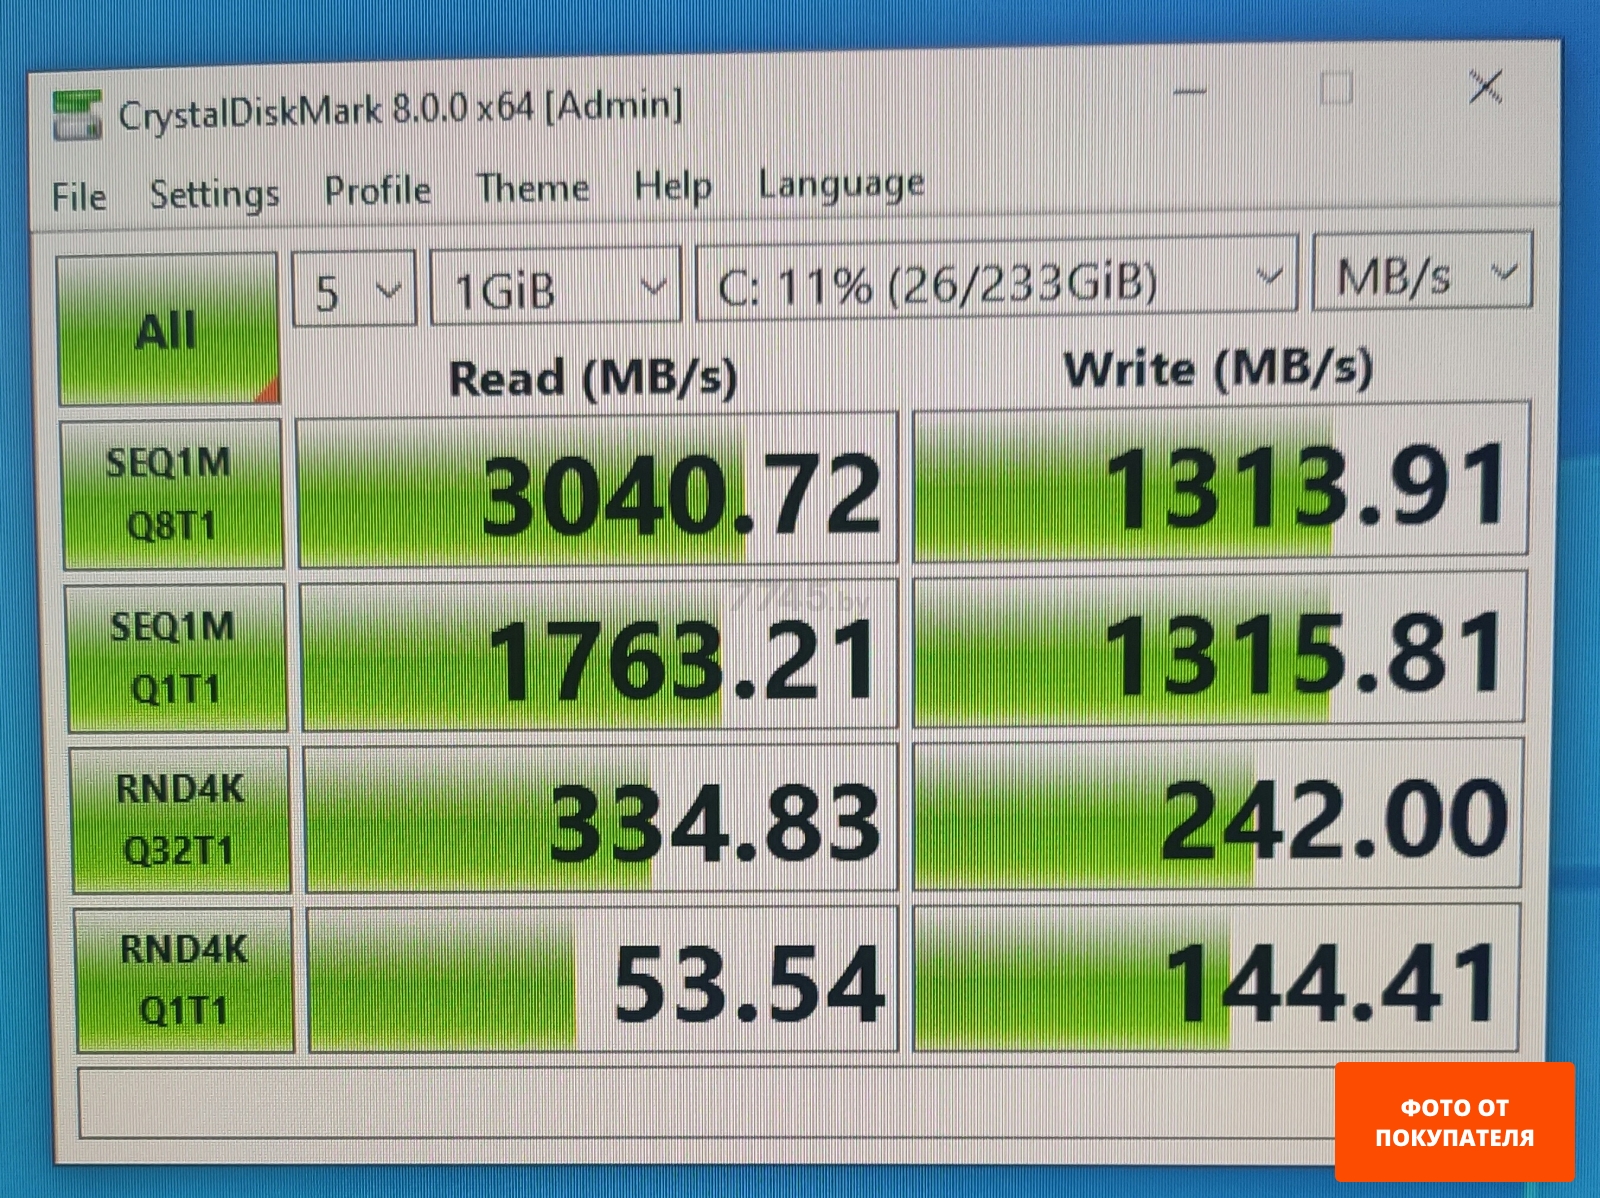 SSD диск Netac NV3000 250GB (NT01NV3000-250-E4X)